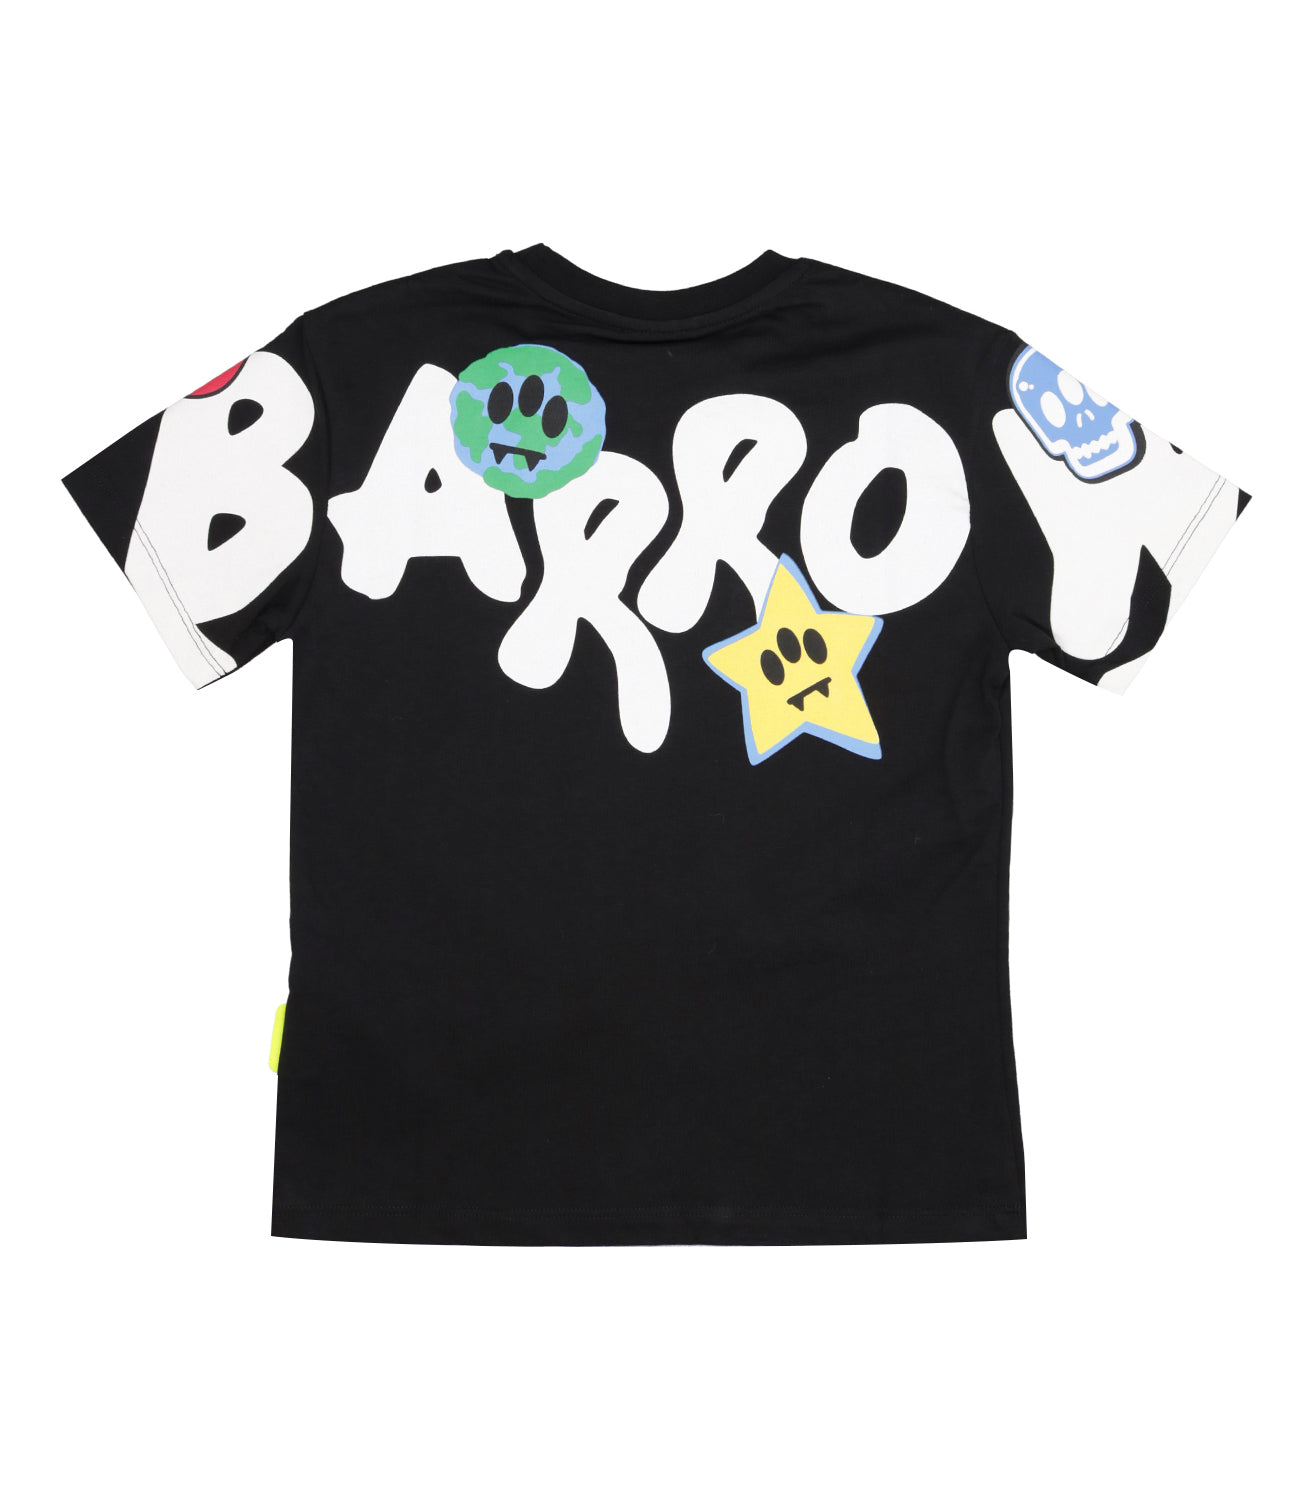 Barrow Kids | T-Shirt Nera